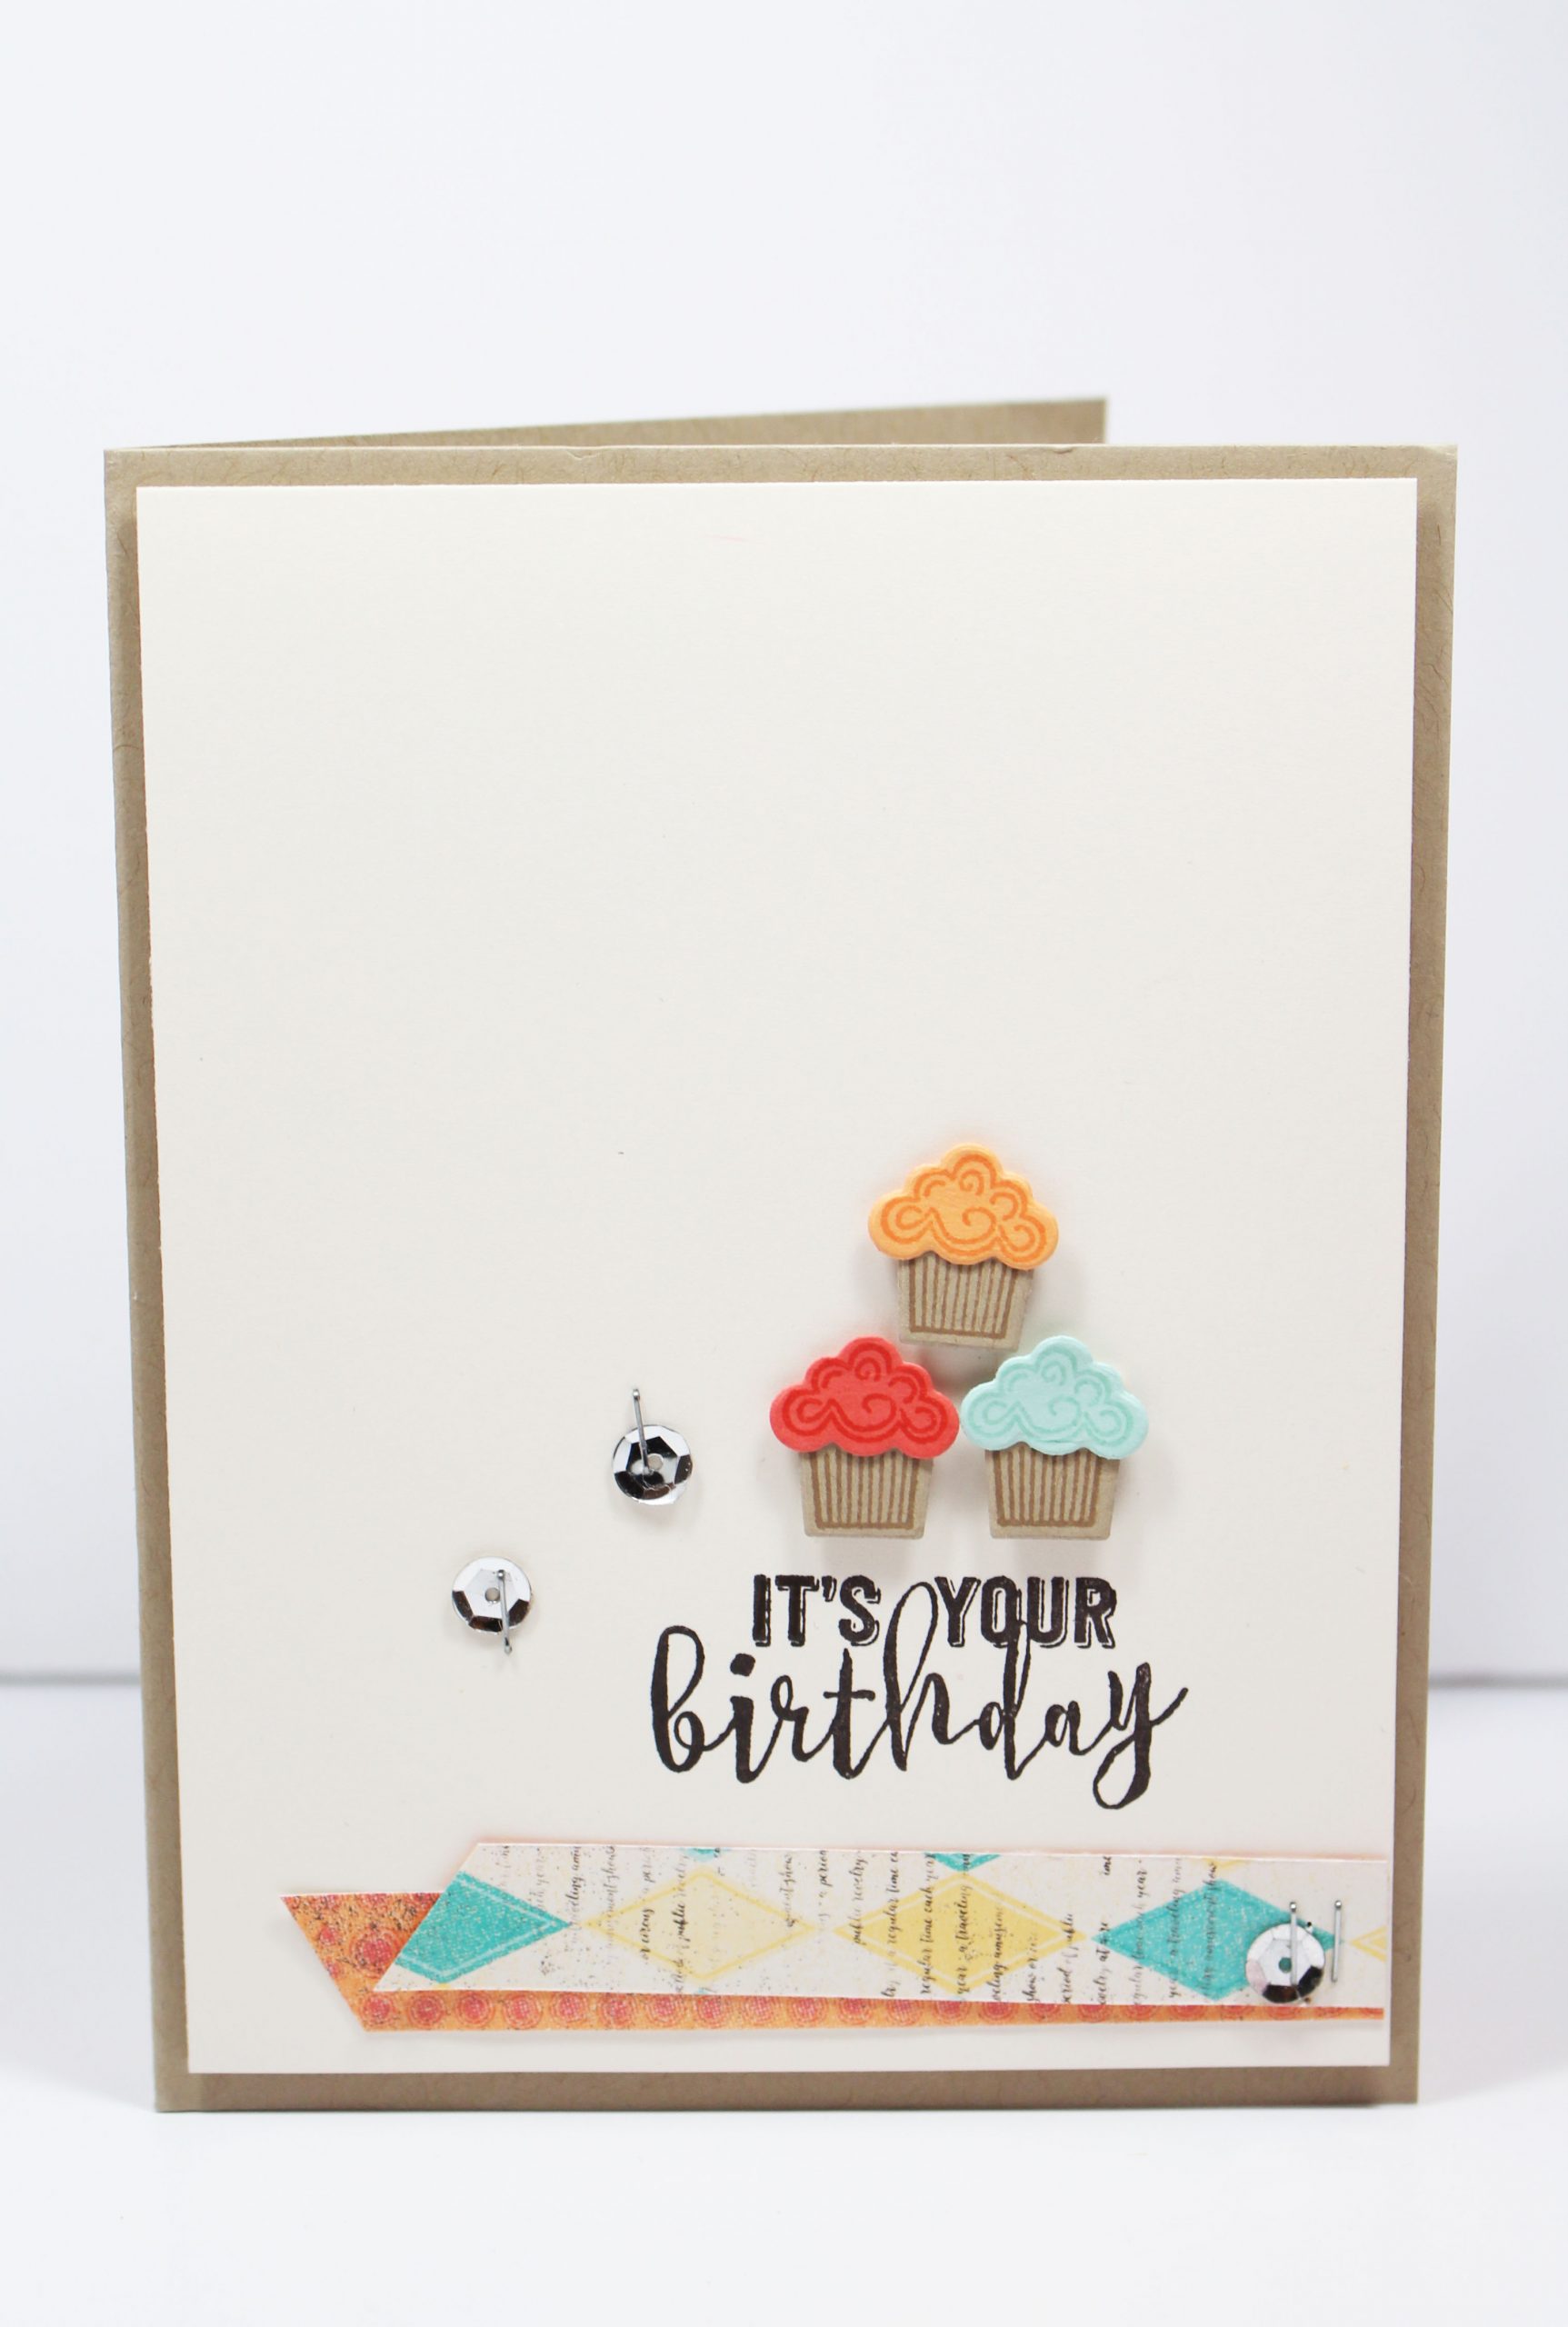 Lift me Up Bundle meets Balloon Adventures – Cupcake Birthday Card Tutorial